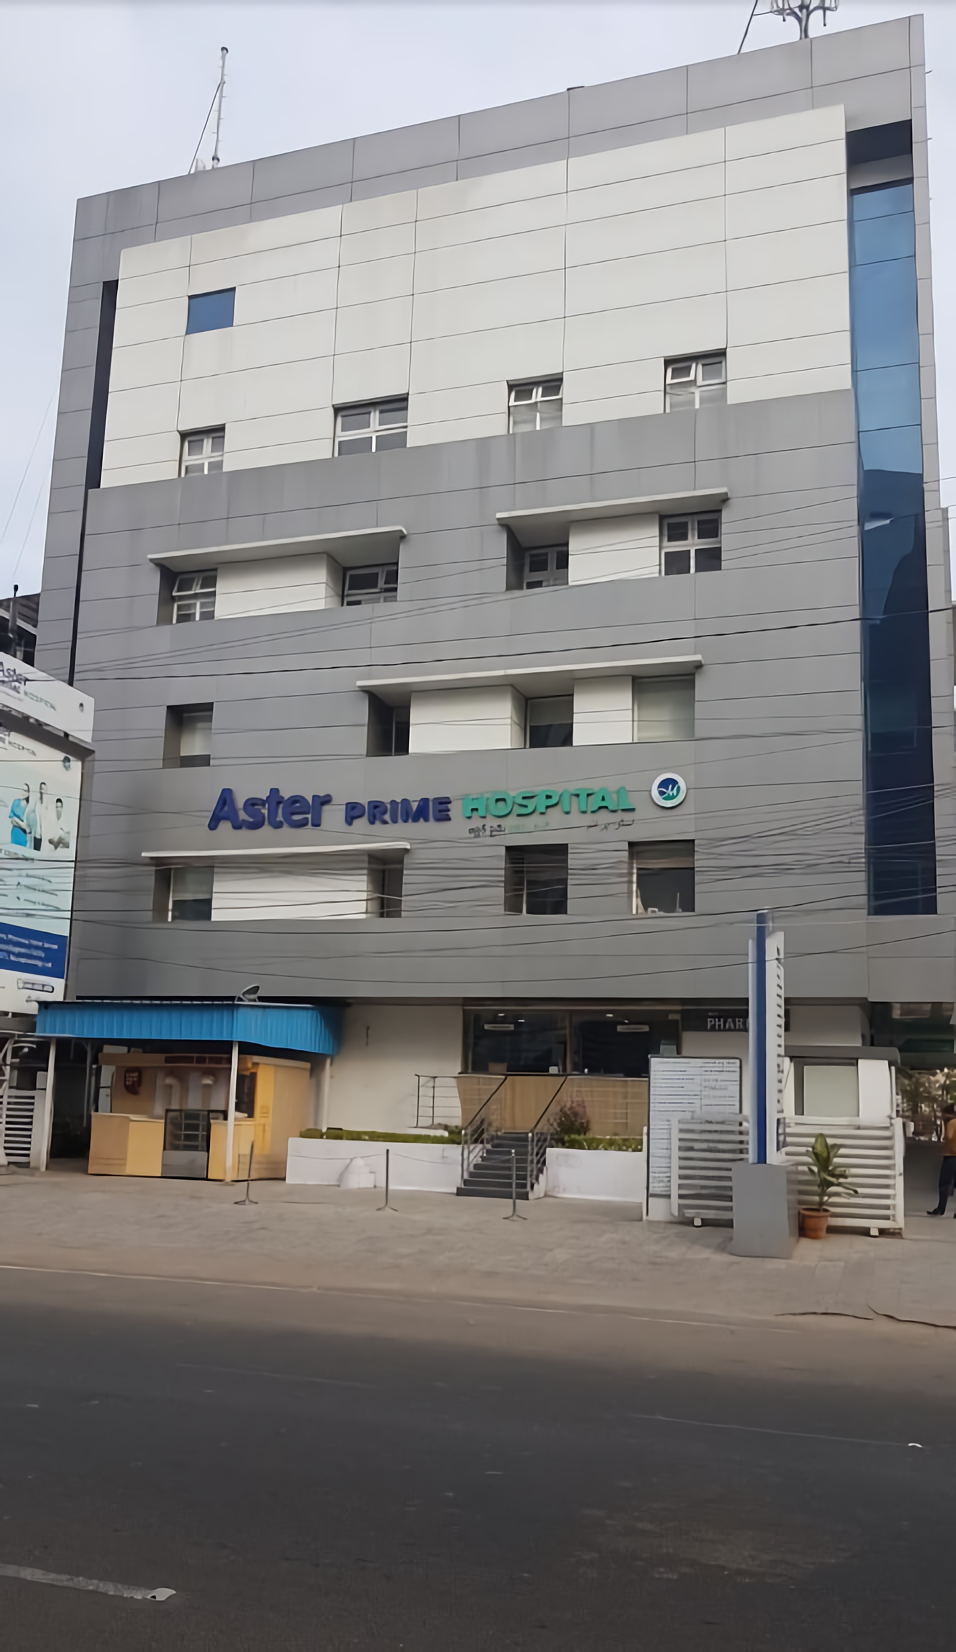 Aster Prime Hospital photo